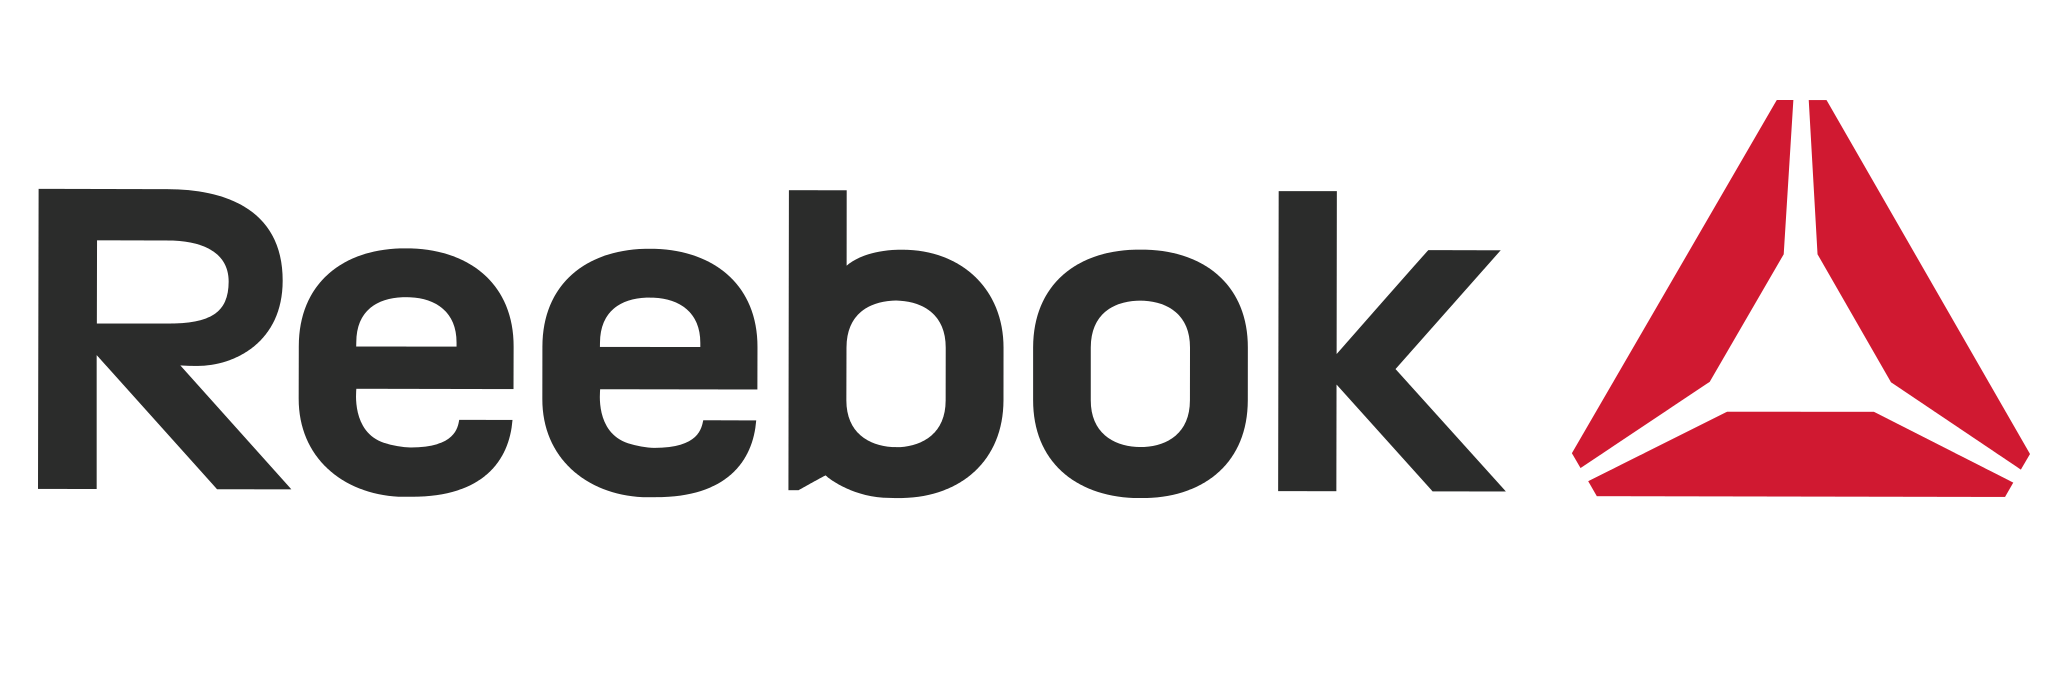 Reebok Classic Logo